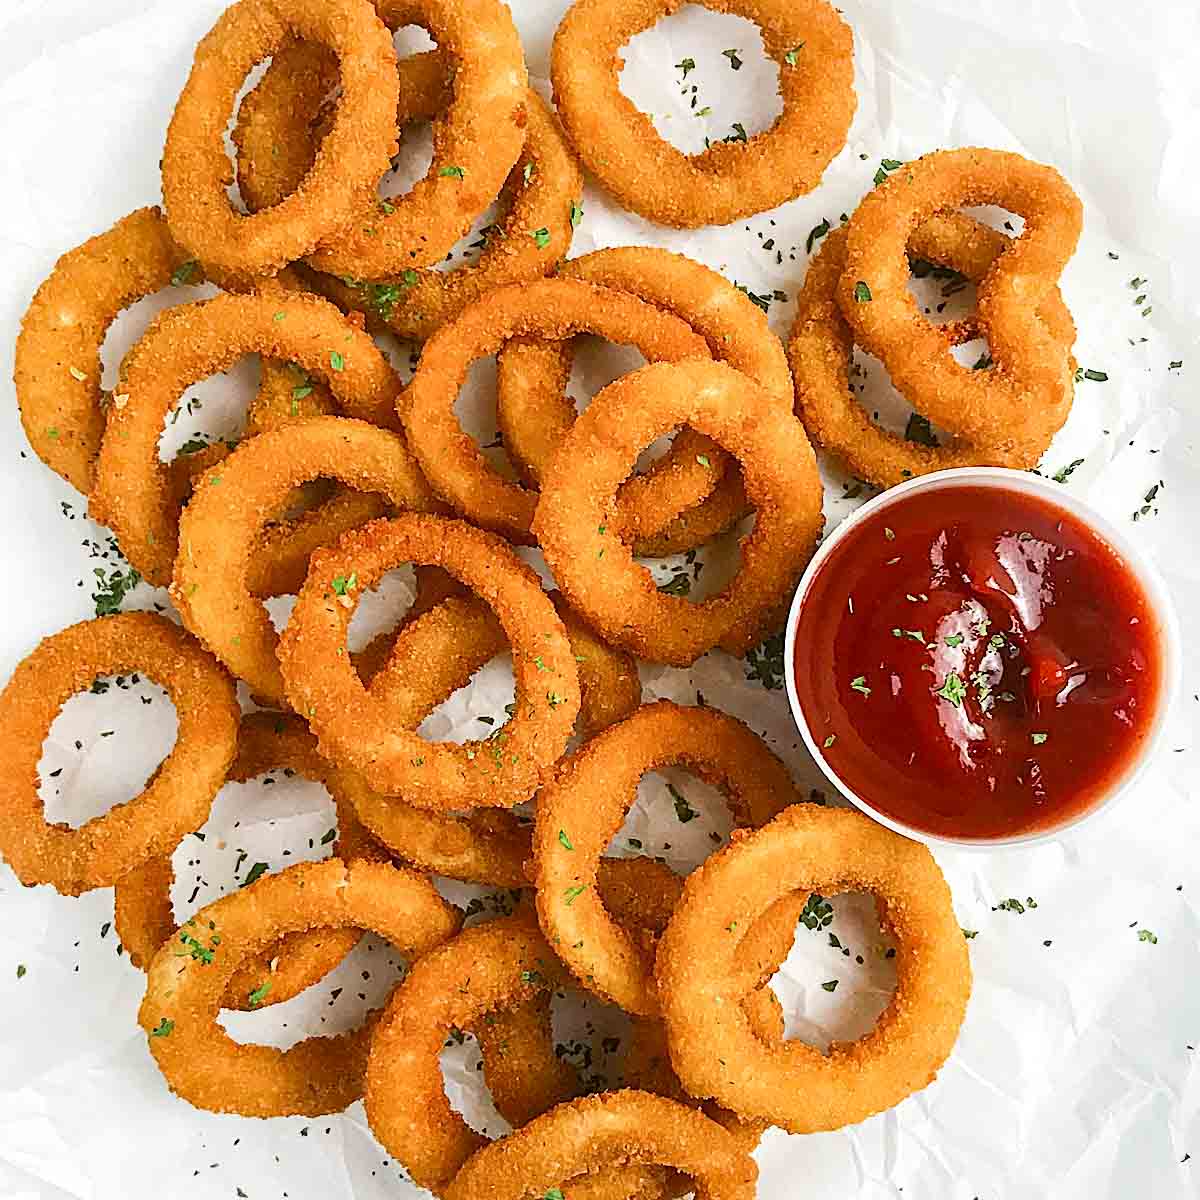 Frozen Onion Rings in Air fryer - Rachna cooks